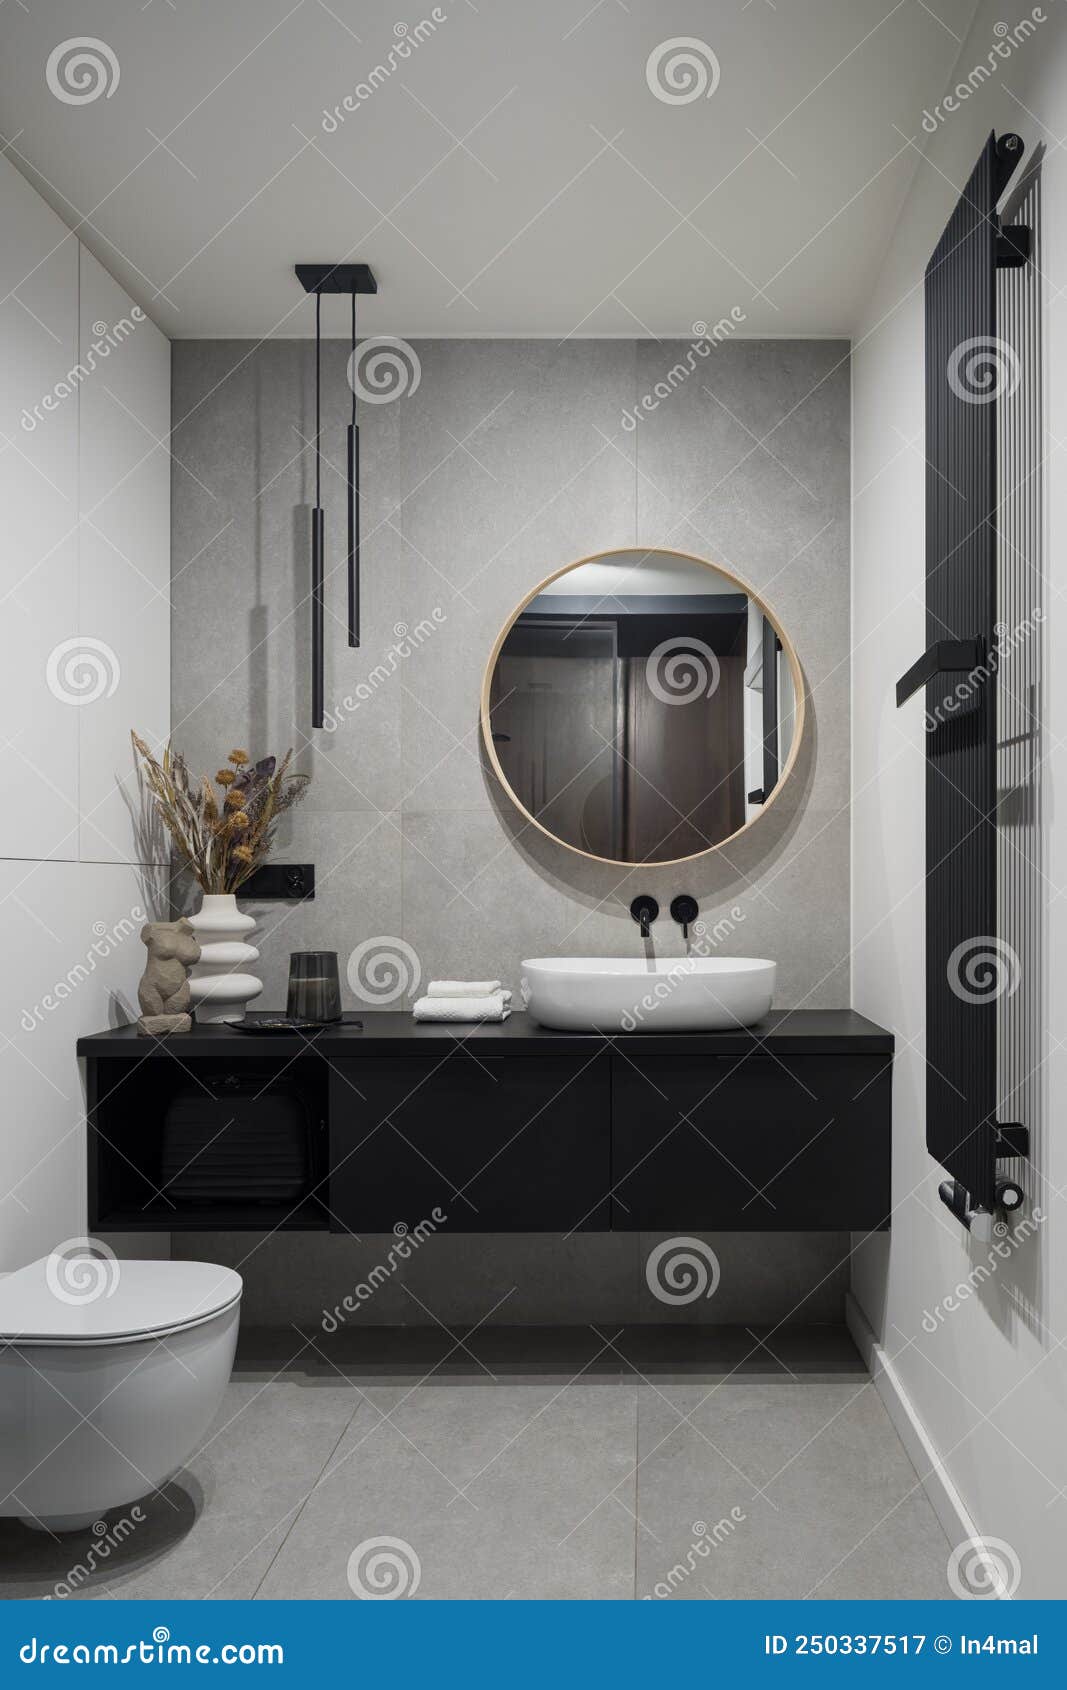 spacious bathroom with decorative concrete style tiles